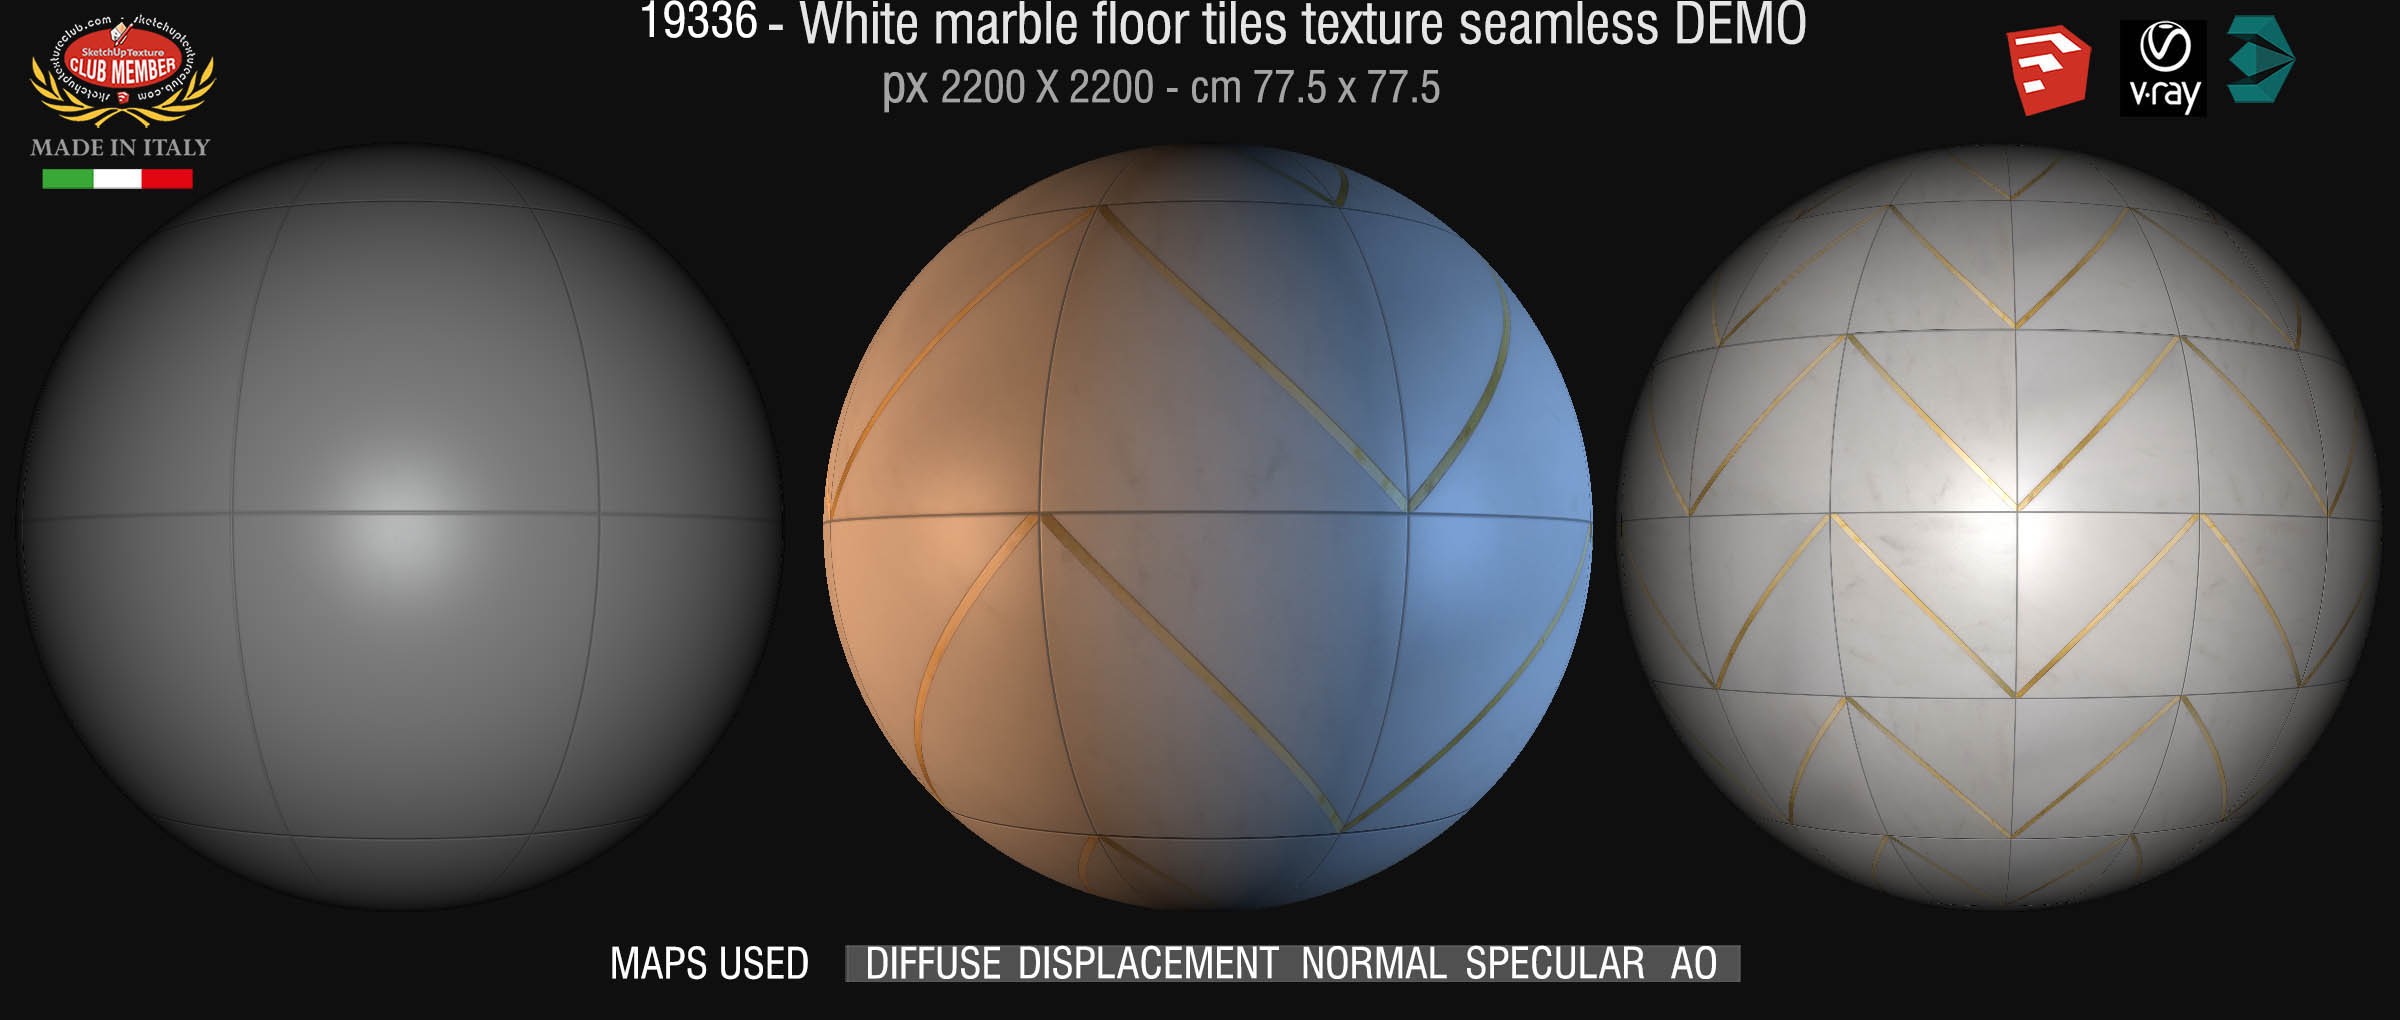 19336 Geometric pattern white marble floor tile texture seamless + maps DEMO